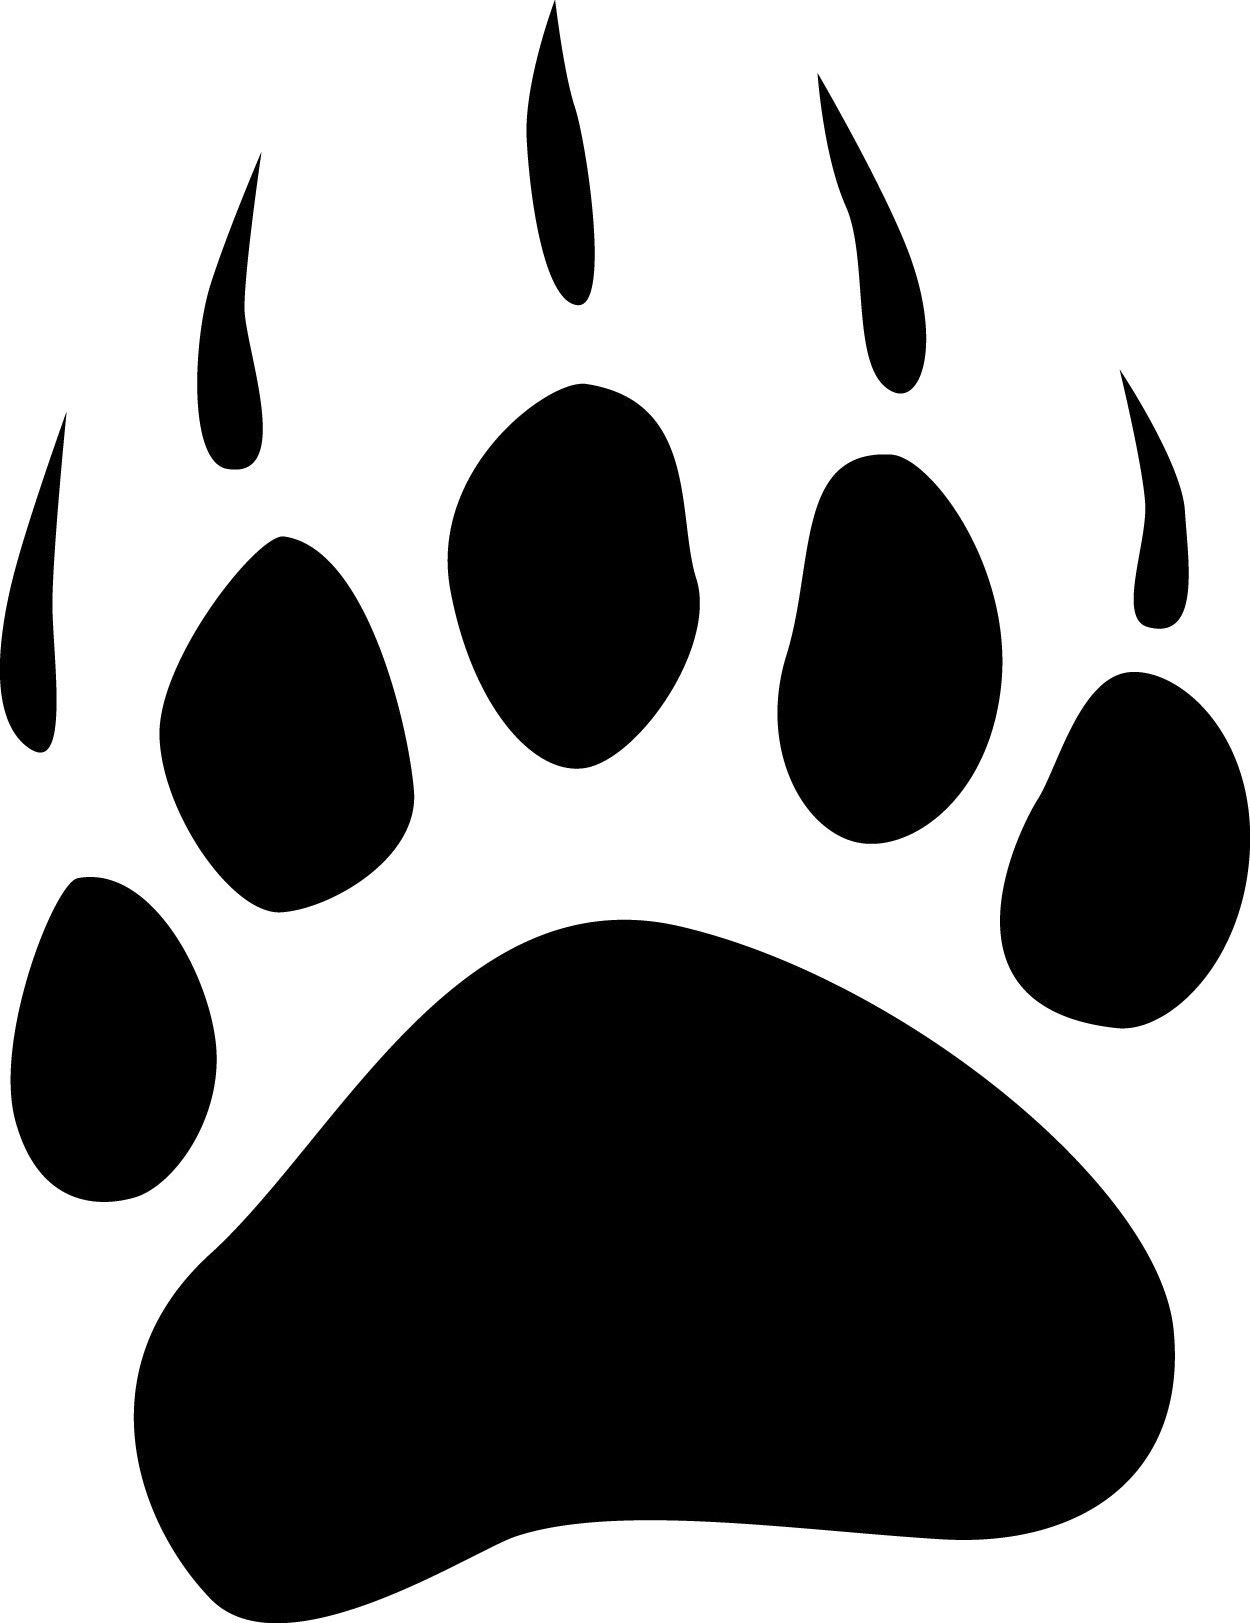 Logo Black And White Paw Print Circle   Quoteko